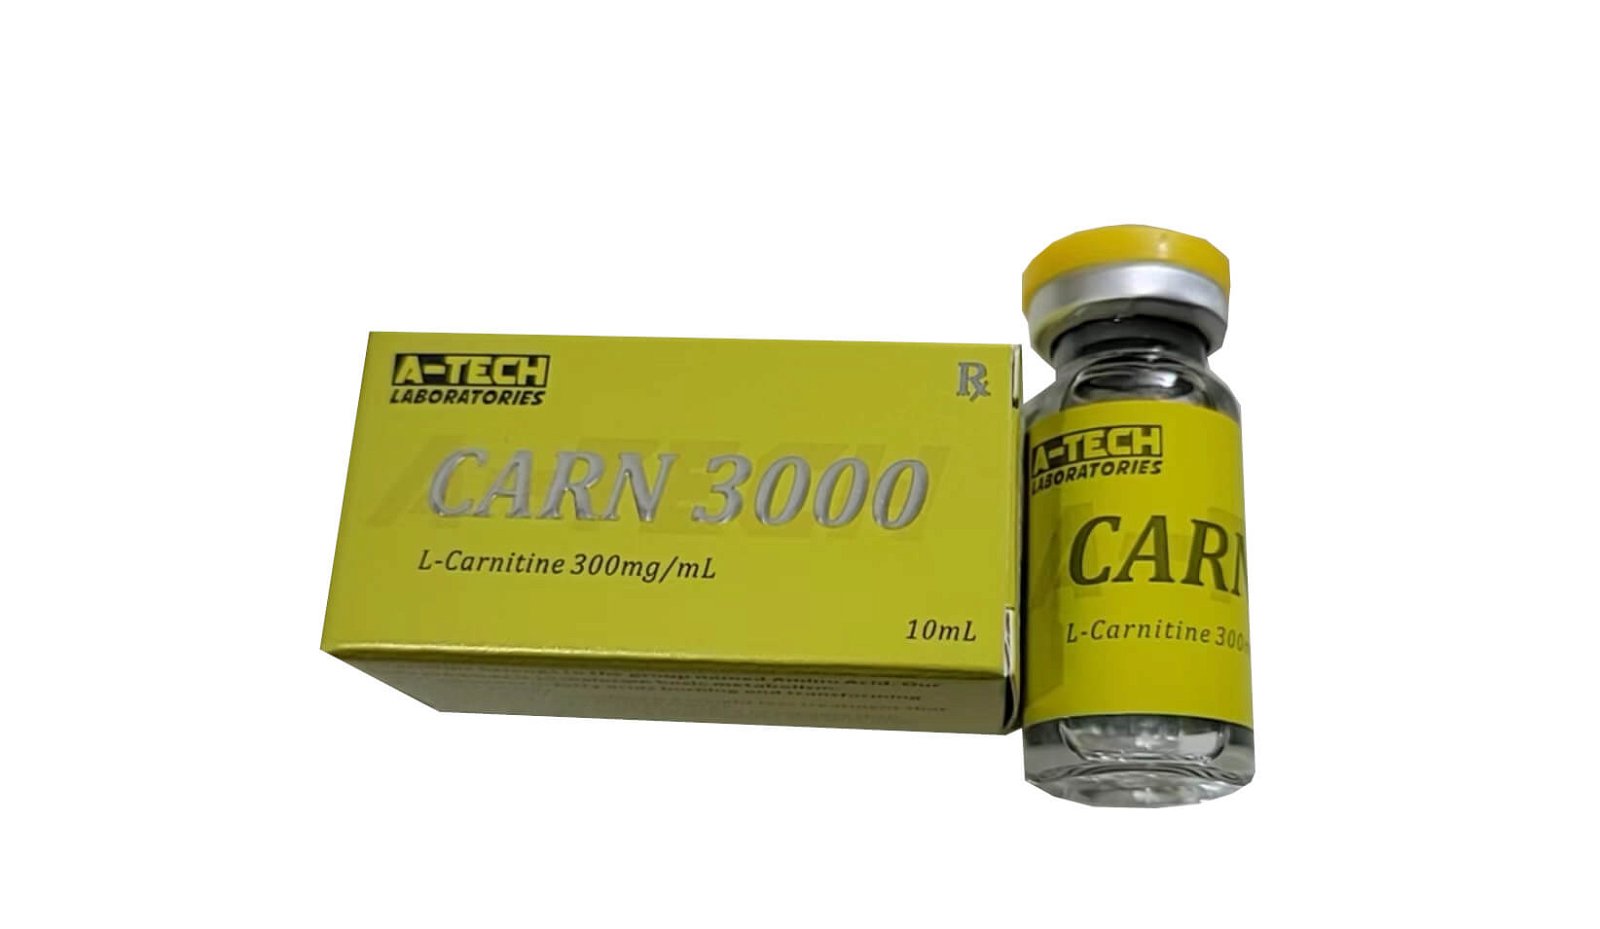 L-carnitine 300mg Laboratoires A-tech